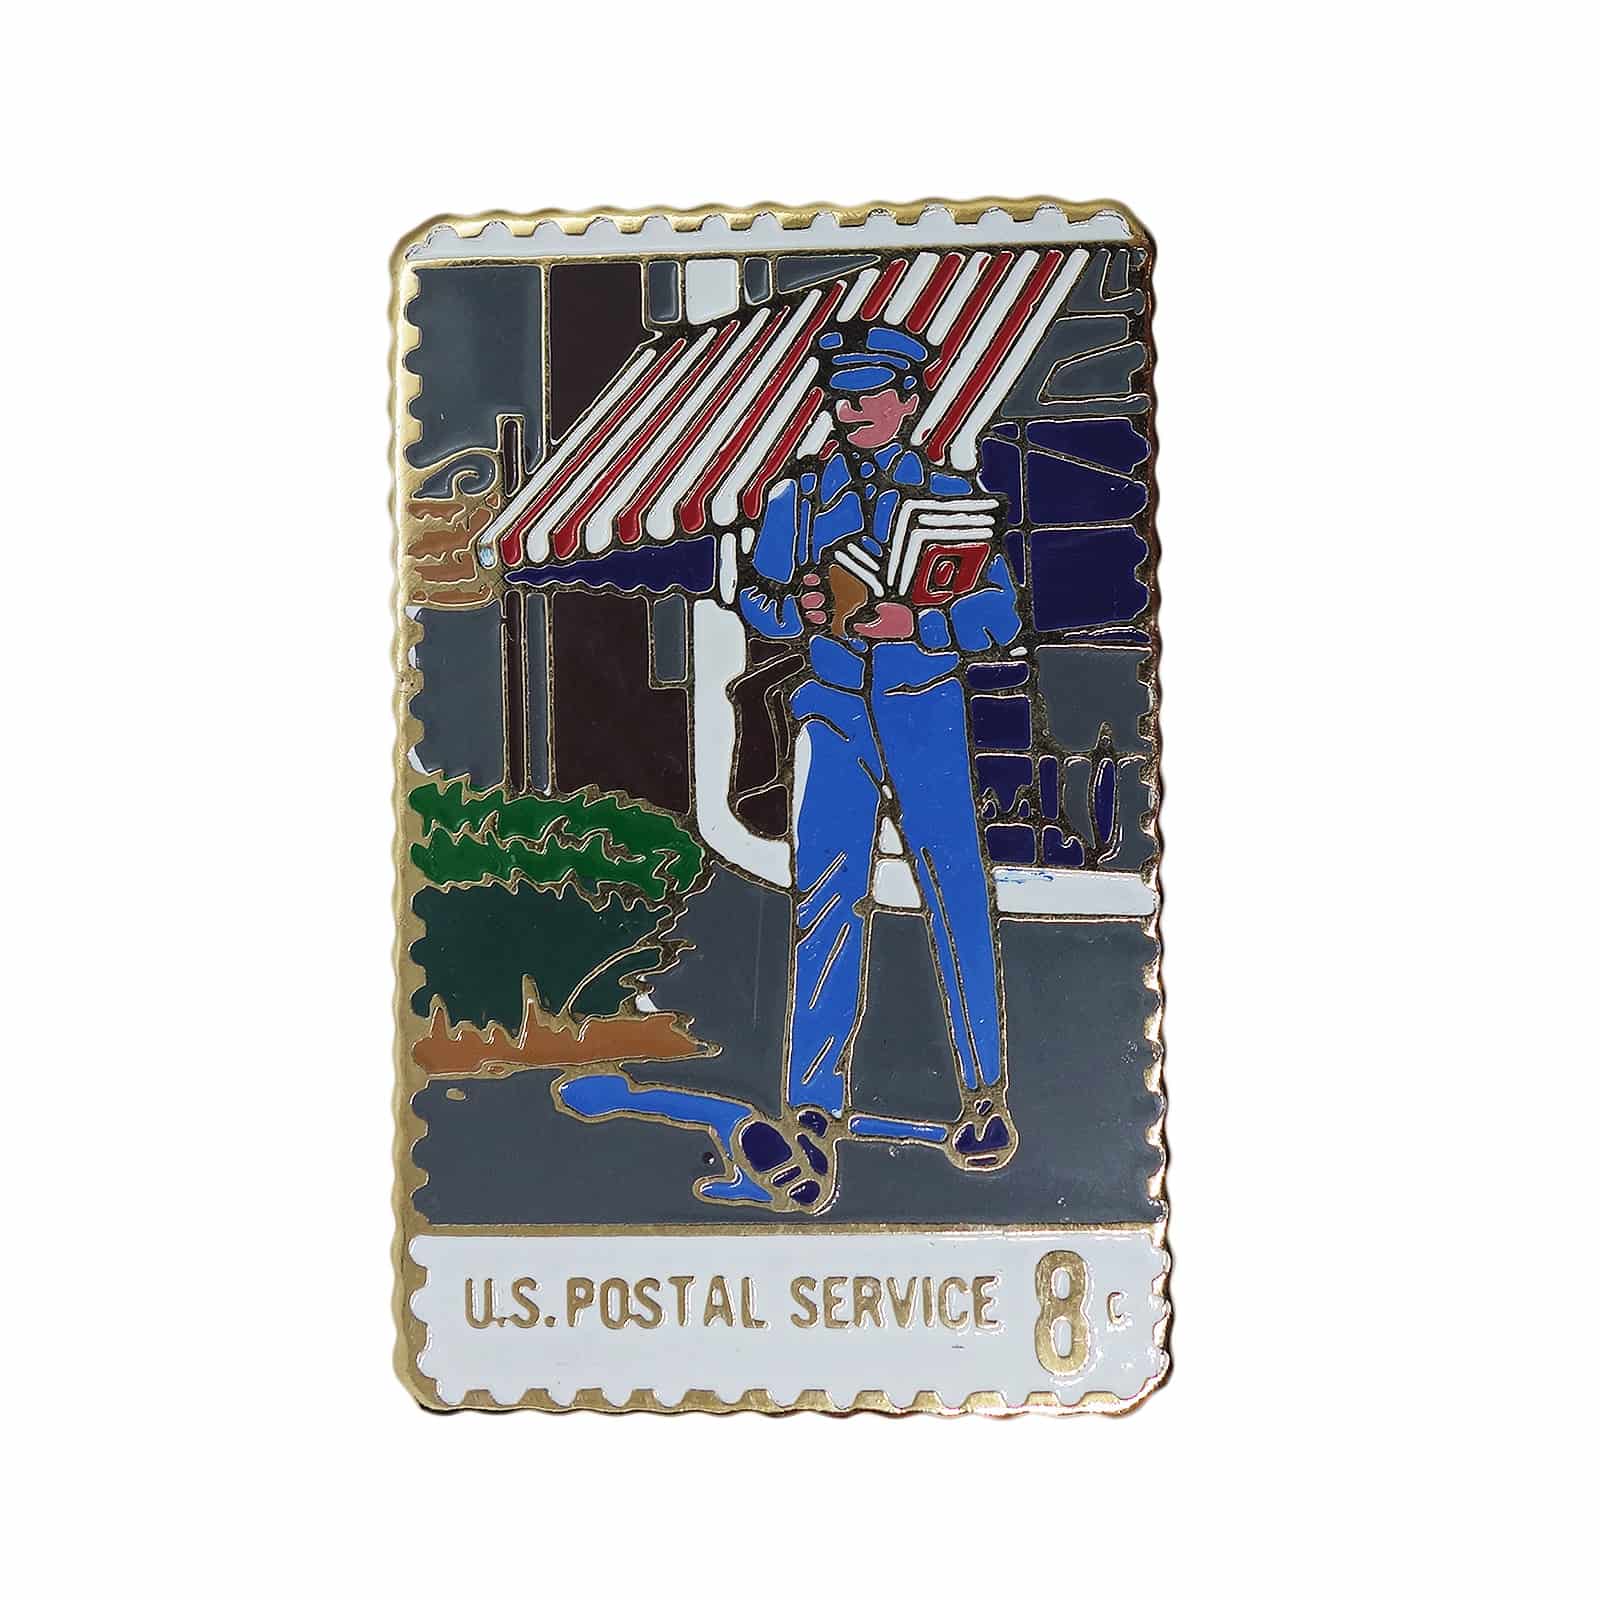 U.S. POSTAL SERVICE 8c 切手型 ピンズ 郵便局員 留め具付き